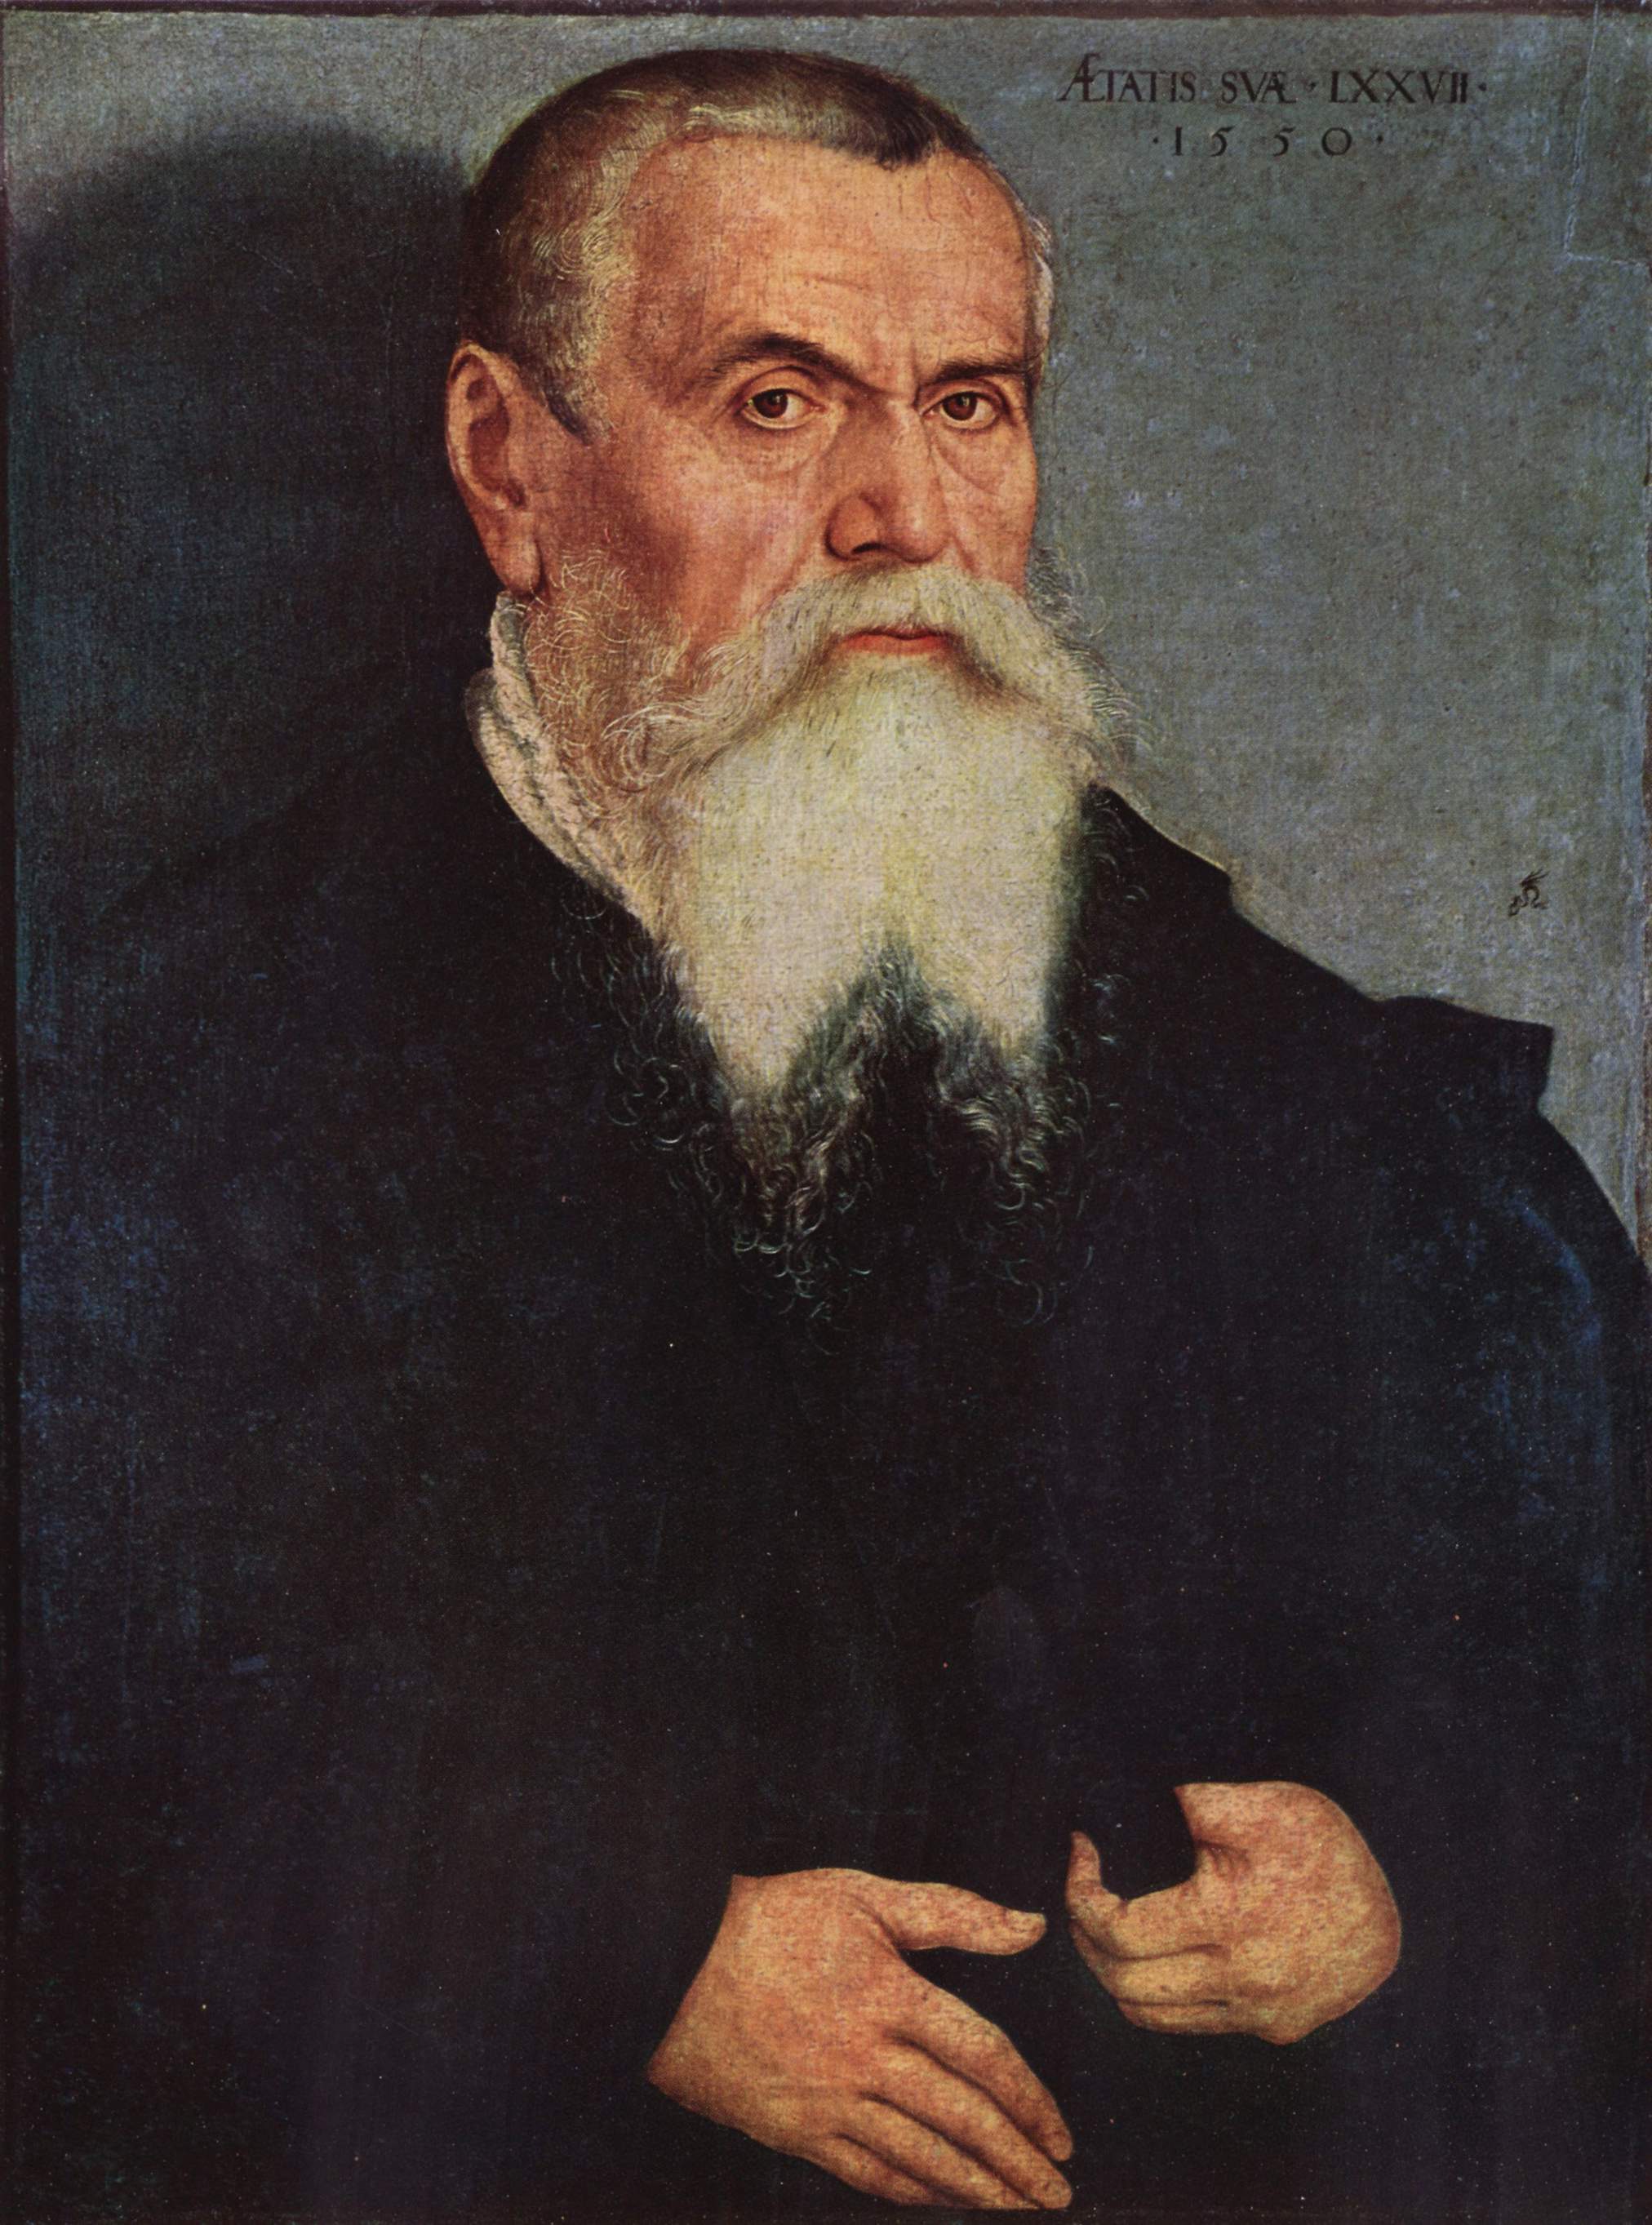 Lucas Cranach the Elder - c. 1472 - October 16, 1553